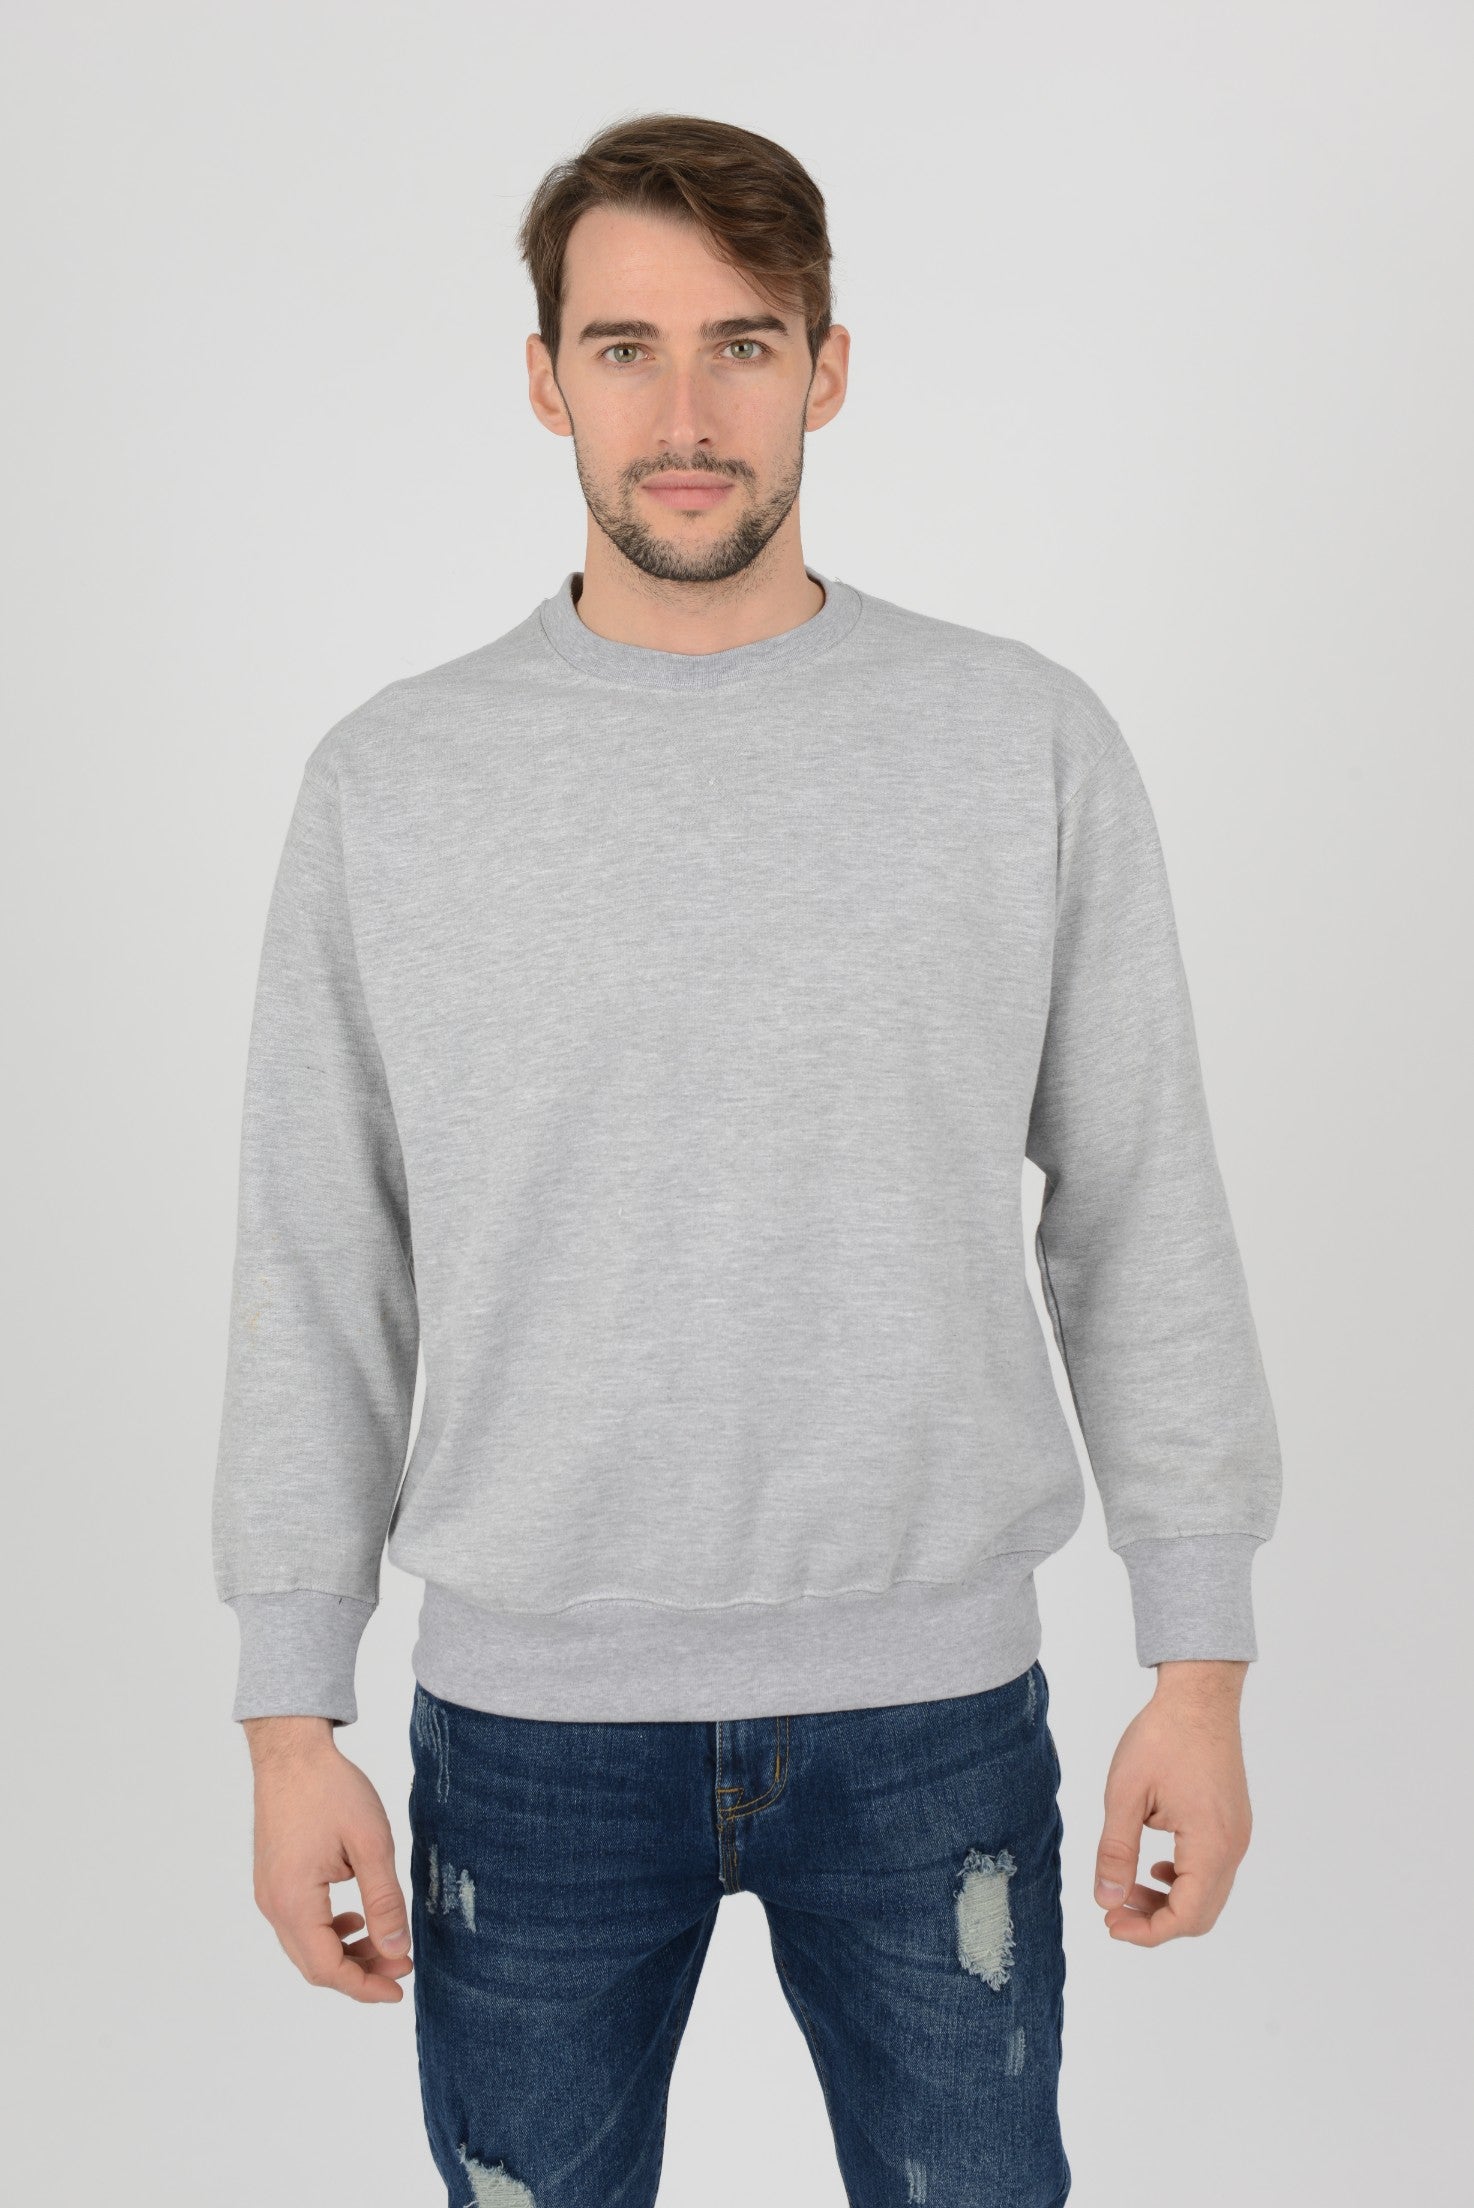 Mens-Plain-Fleece-Sweatshirt-Sweater-Light-Grey